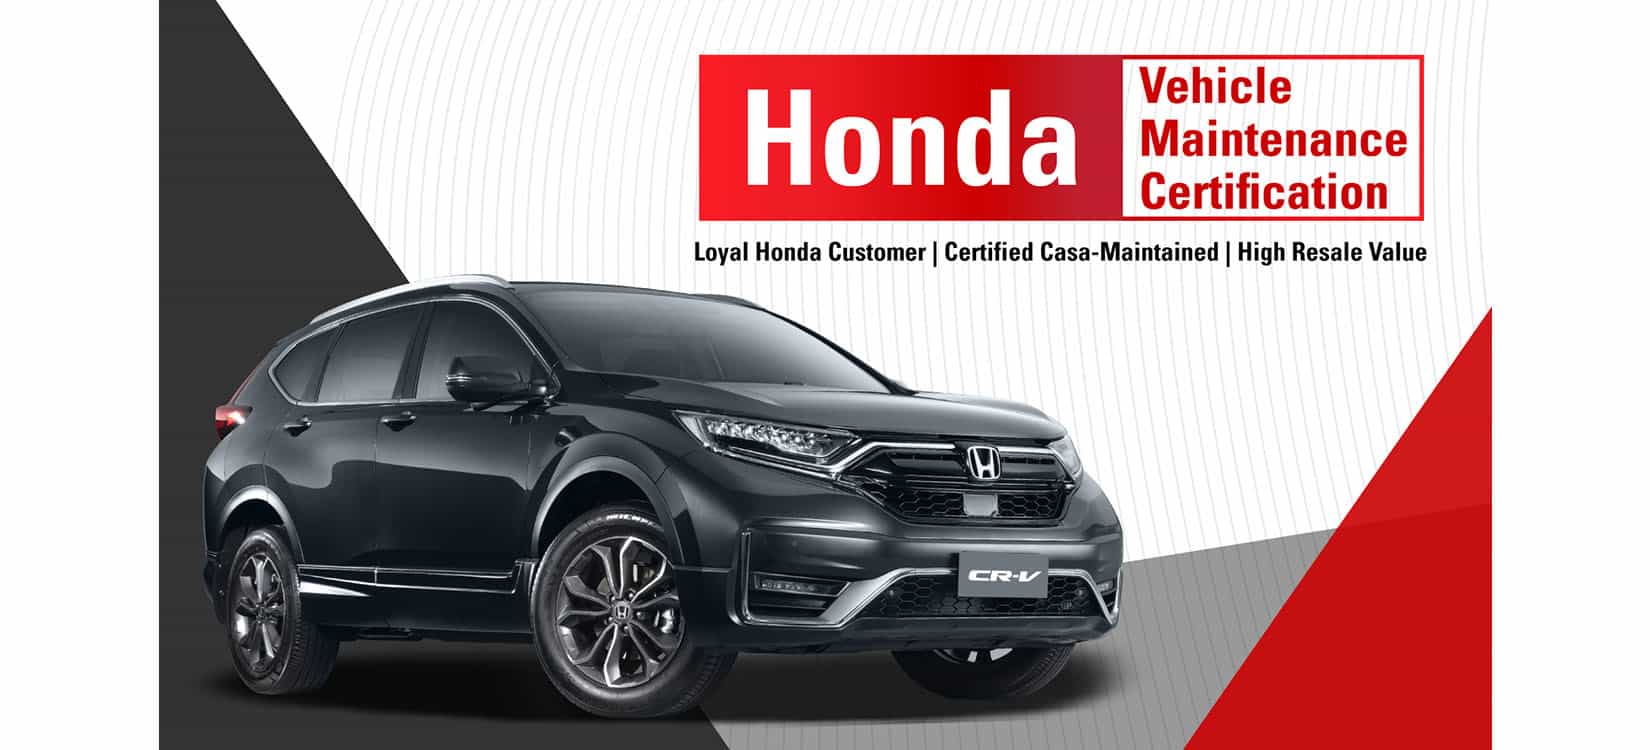 Honda announces Vehicle Certification Program